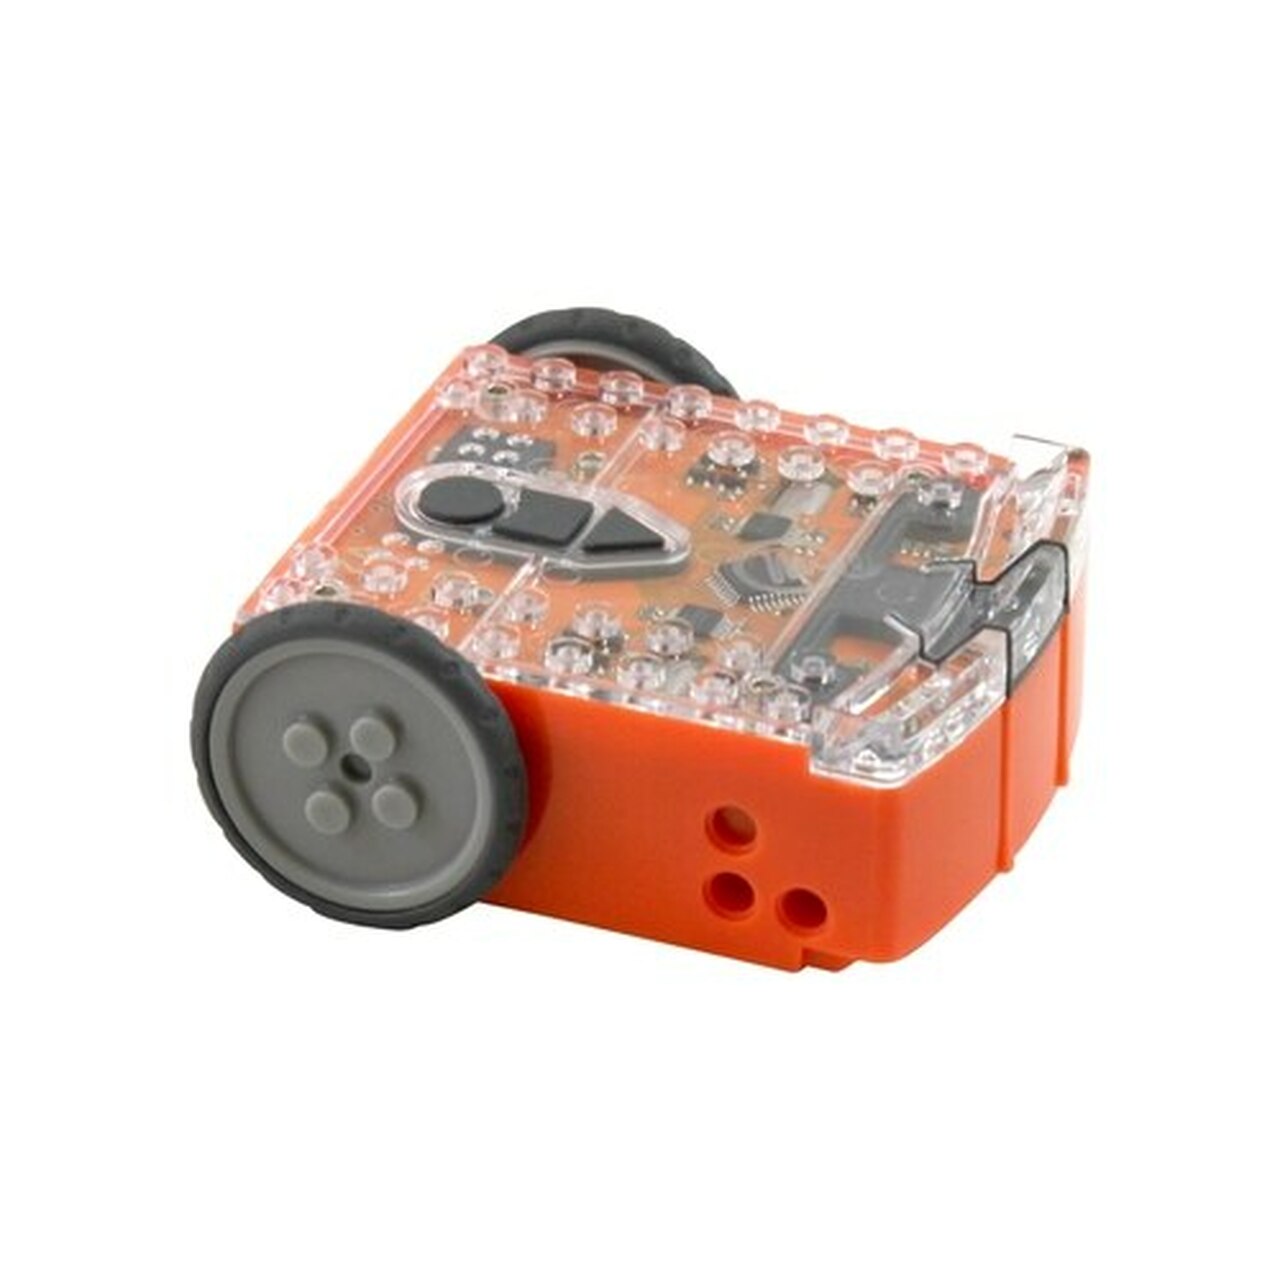 Edison Educational Robot Kit - Set of 3 - STEAM Education - Robotics and Coding - ARVRedtech.com | AR & VR Education Technology